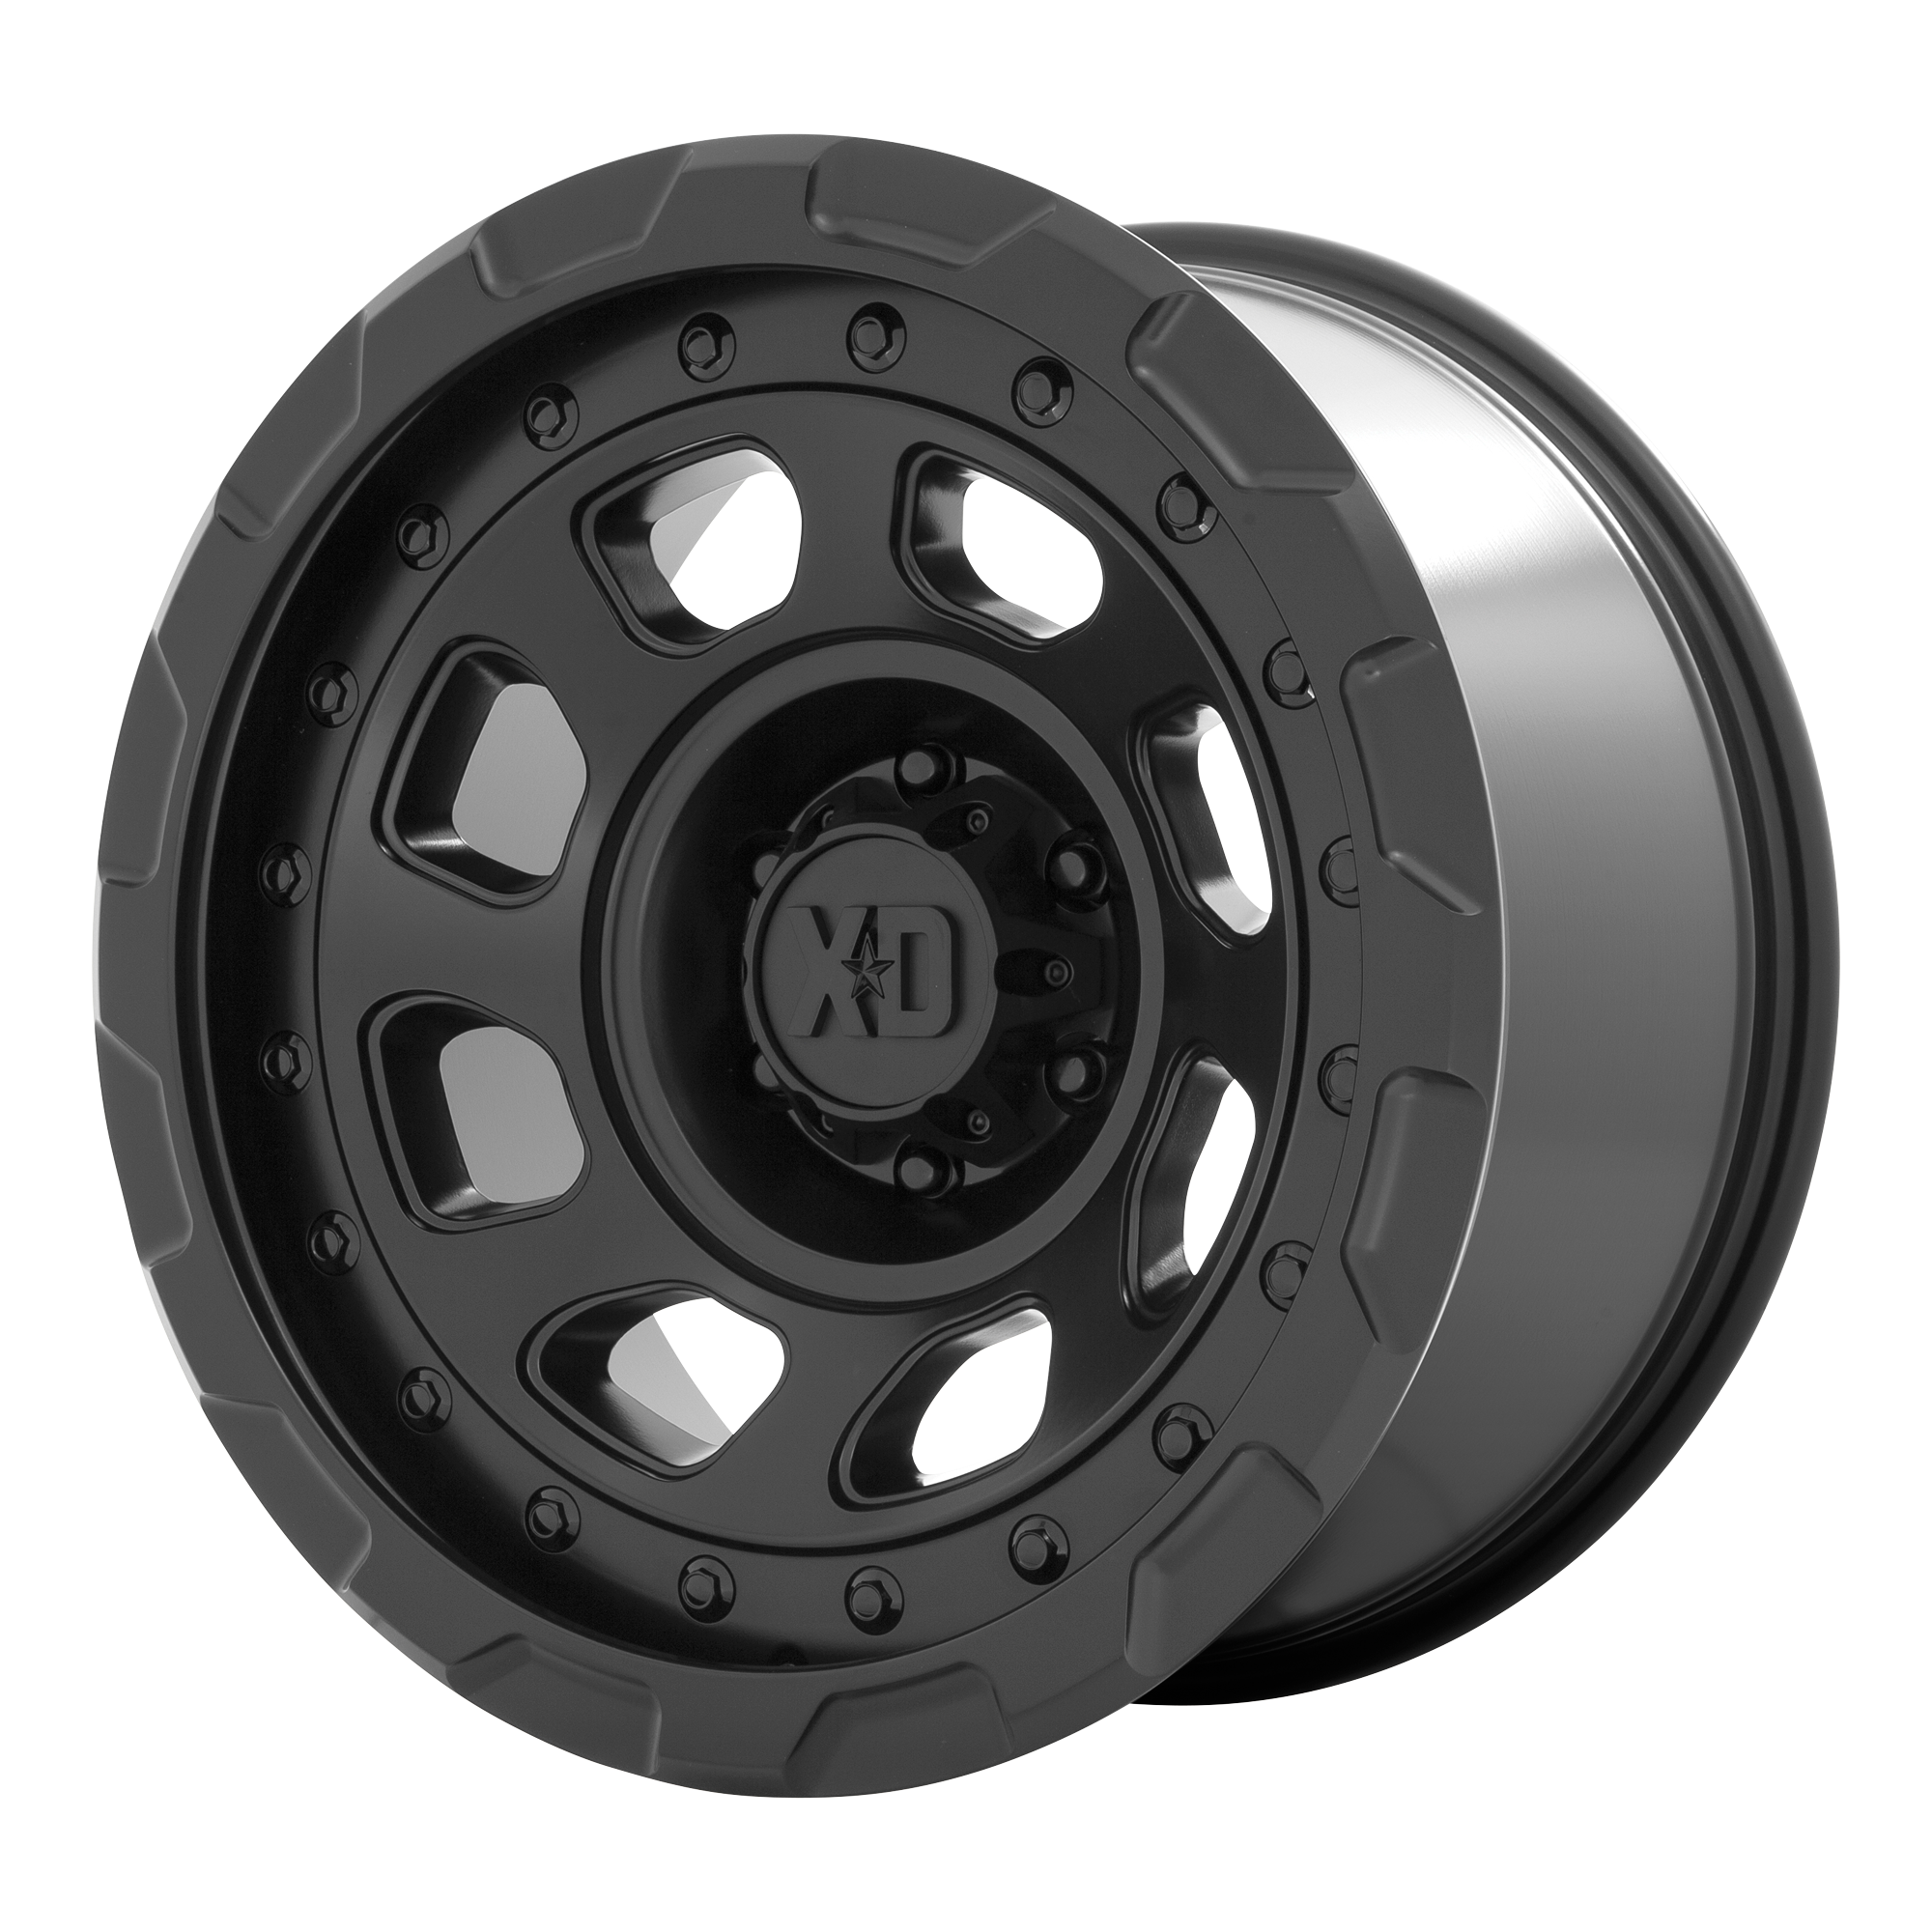 XD 20"x9" Non-Chrome Satin Black Custom Wheel ARSWCWXD86129068700